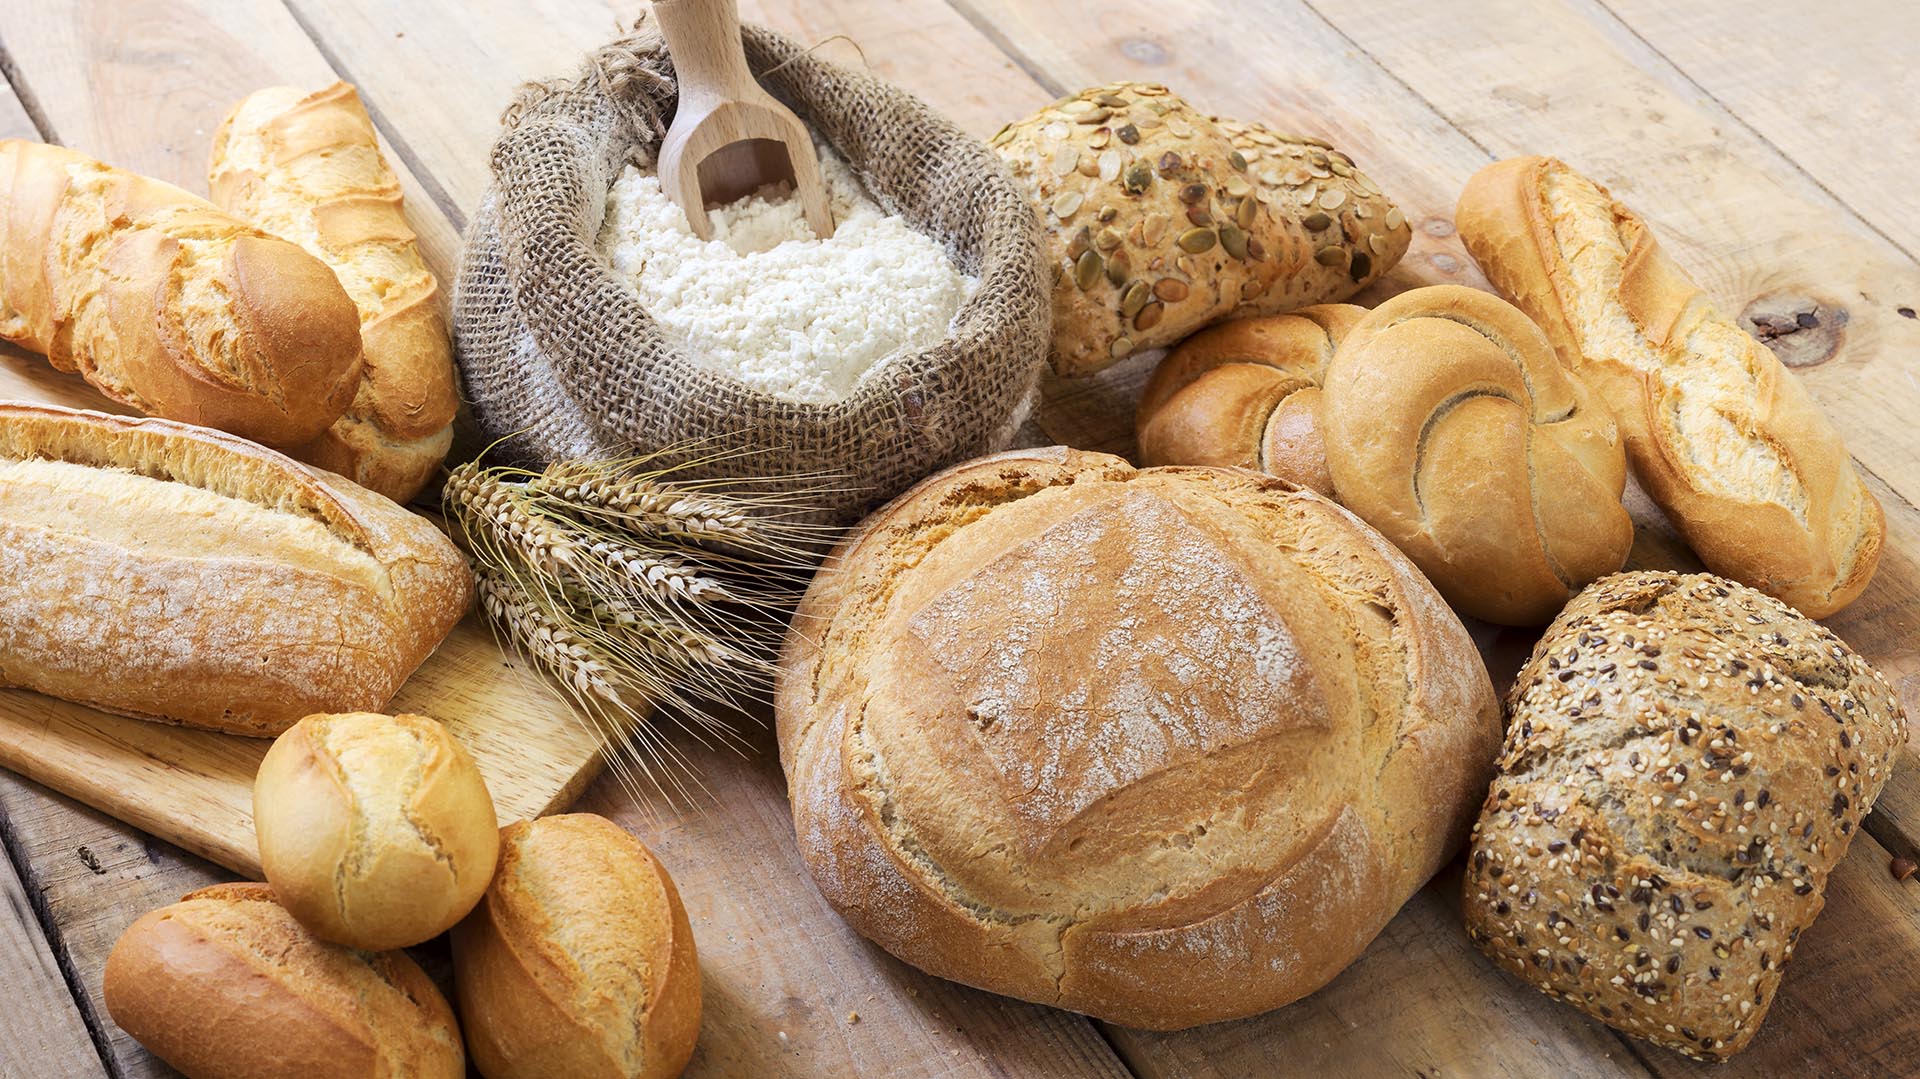 El pan fermentado o de masa madre no siempre está fabricado de manera correcta